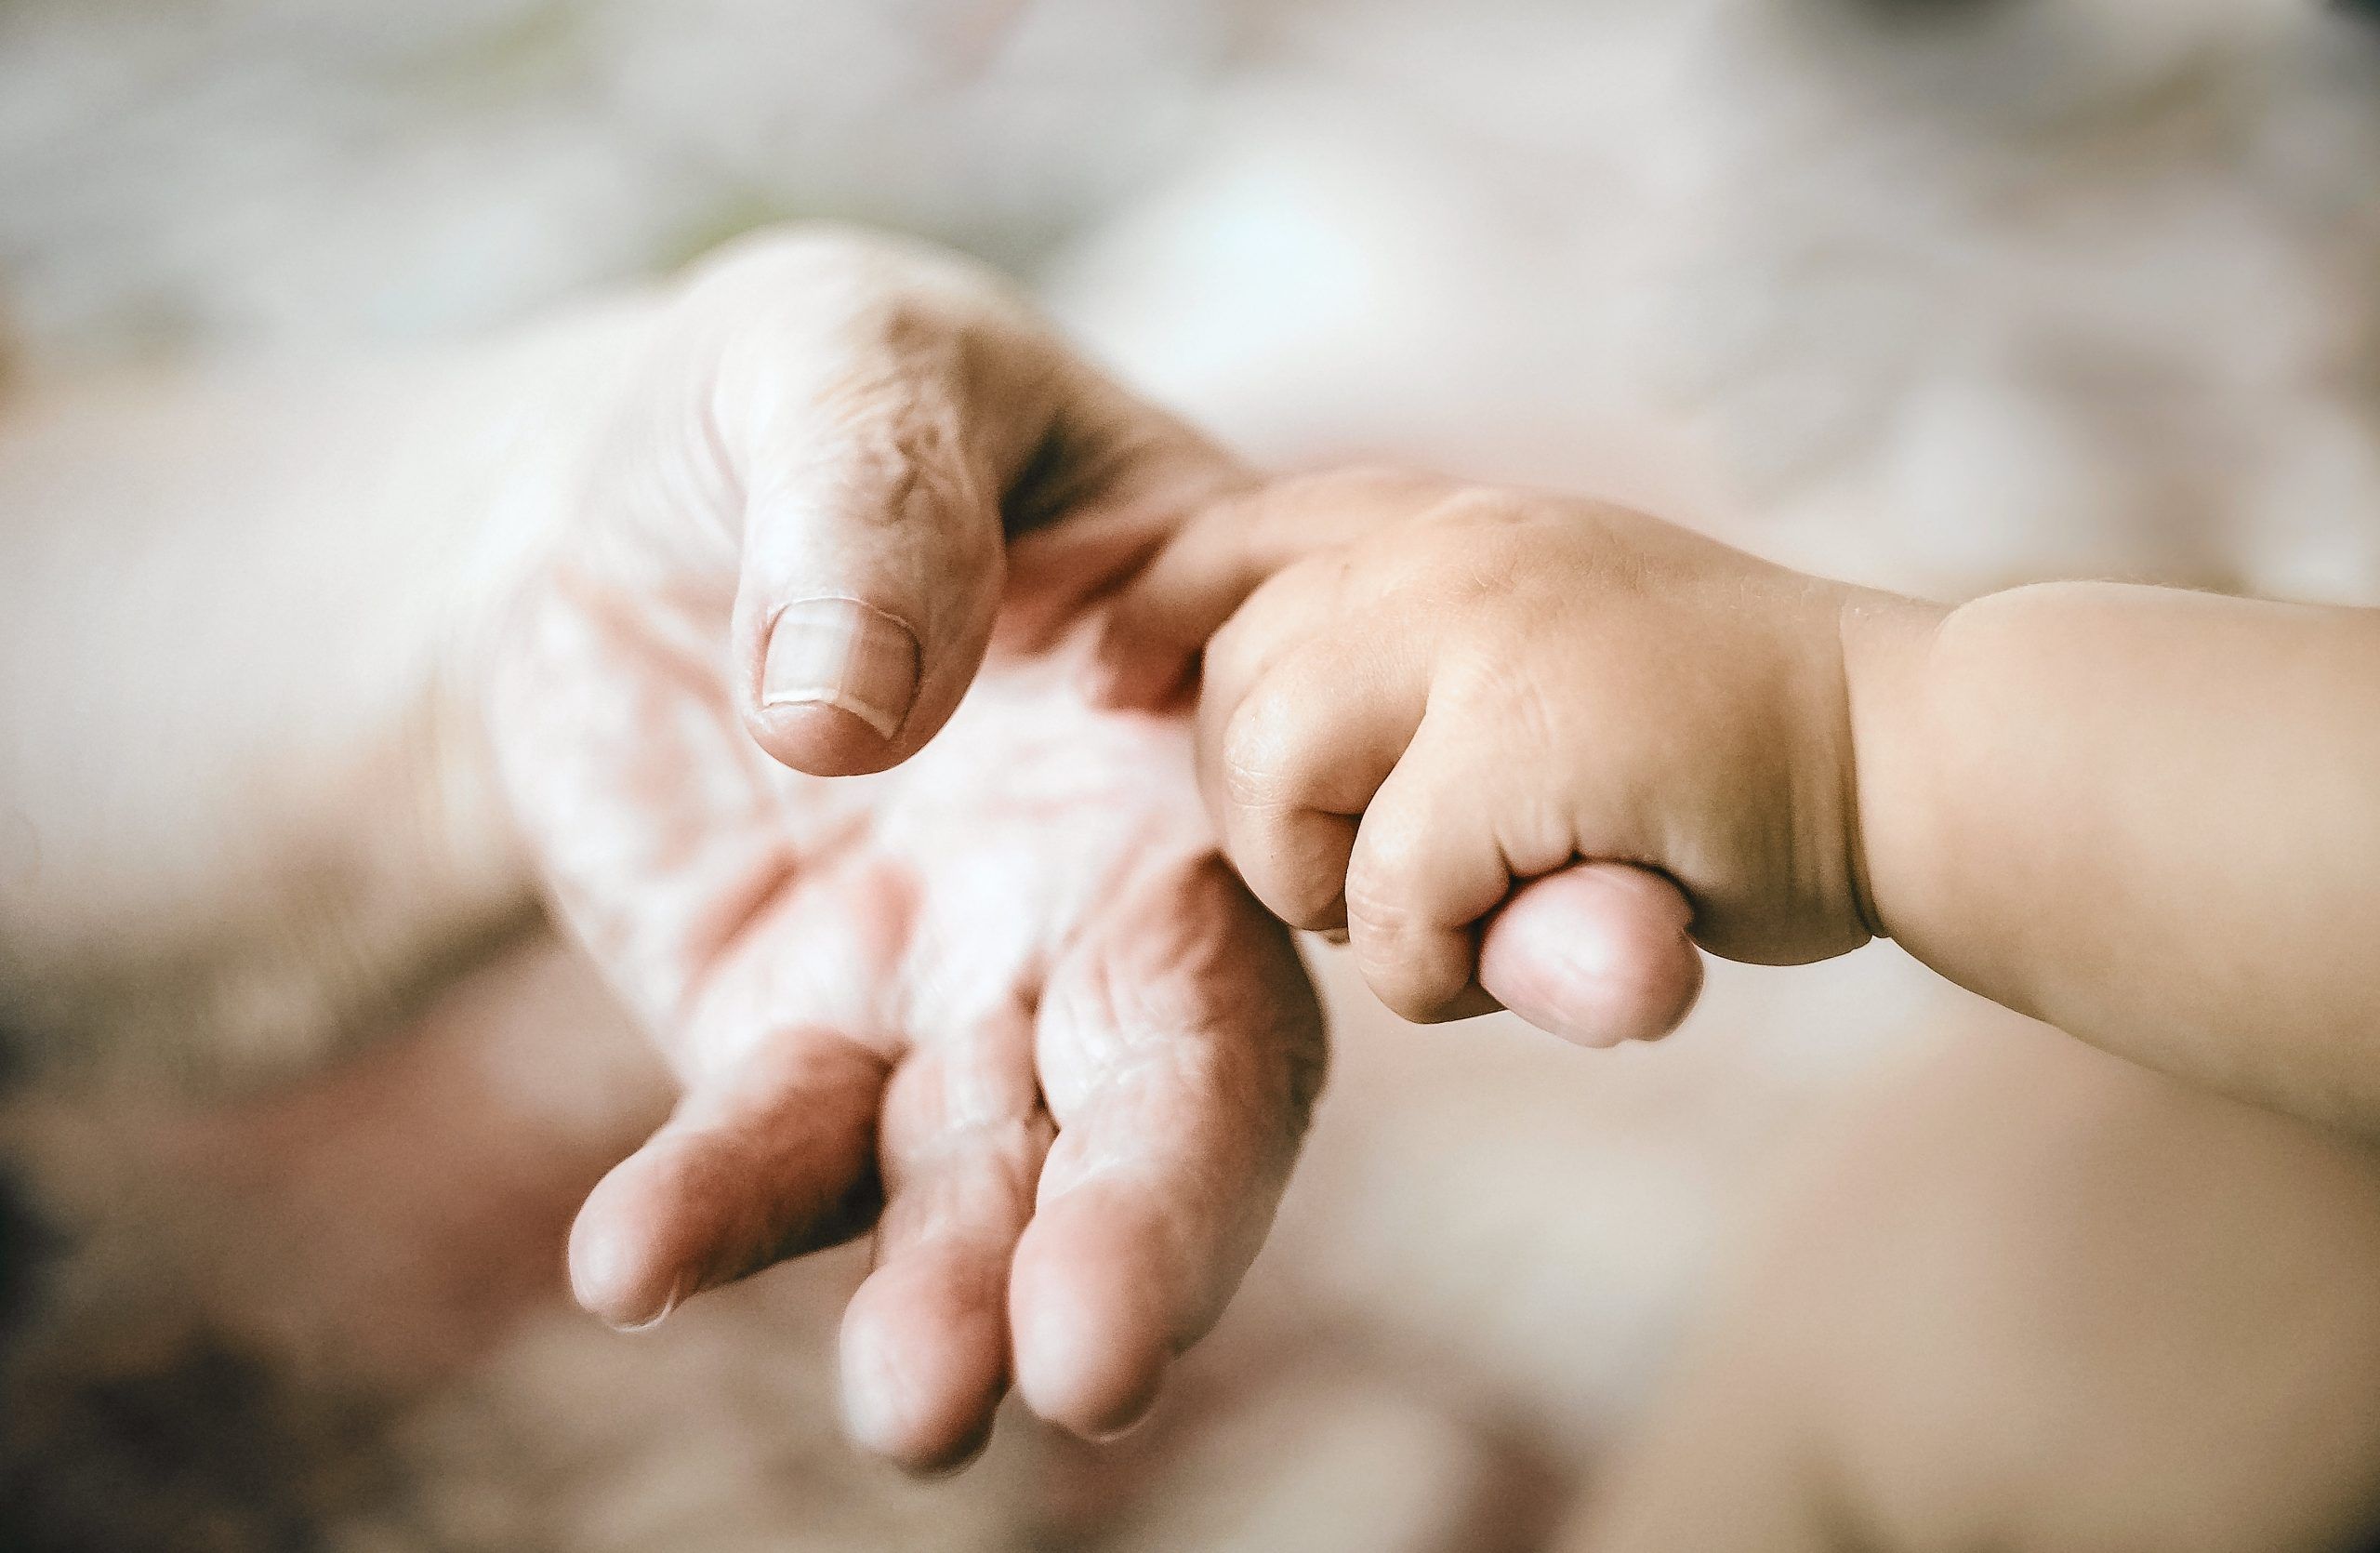 Senior Living: Visits with grandchildren provide ‘addictive intimacy’